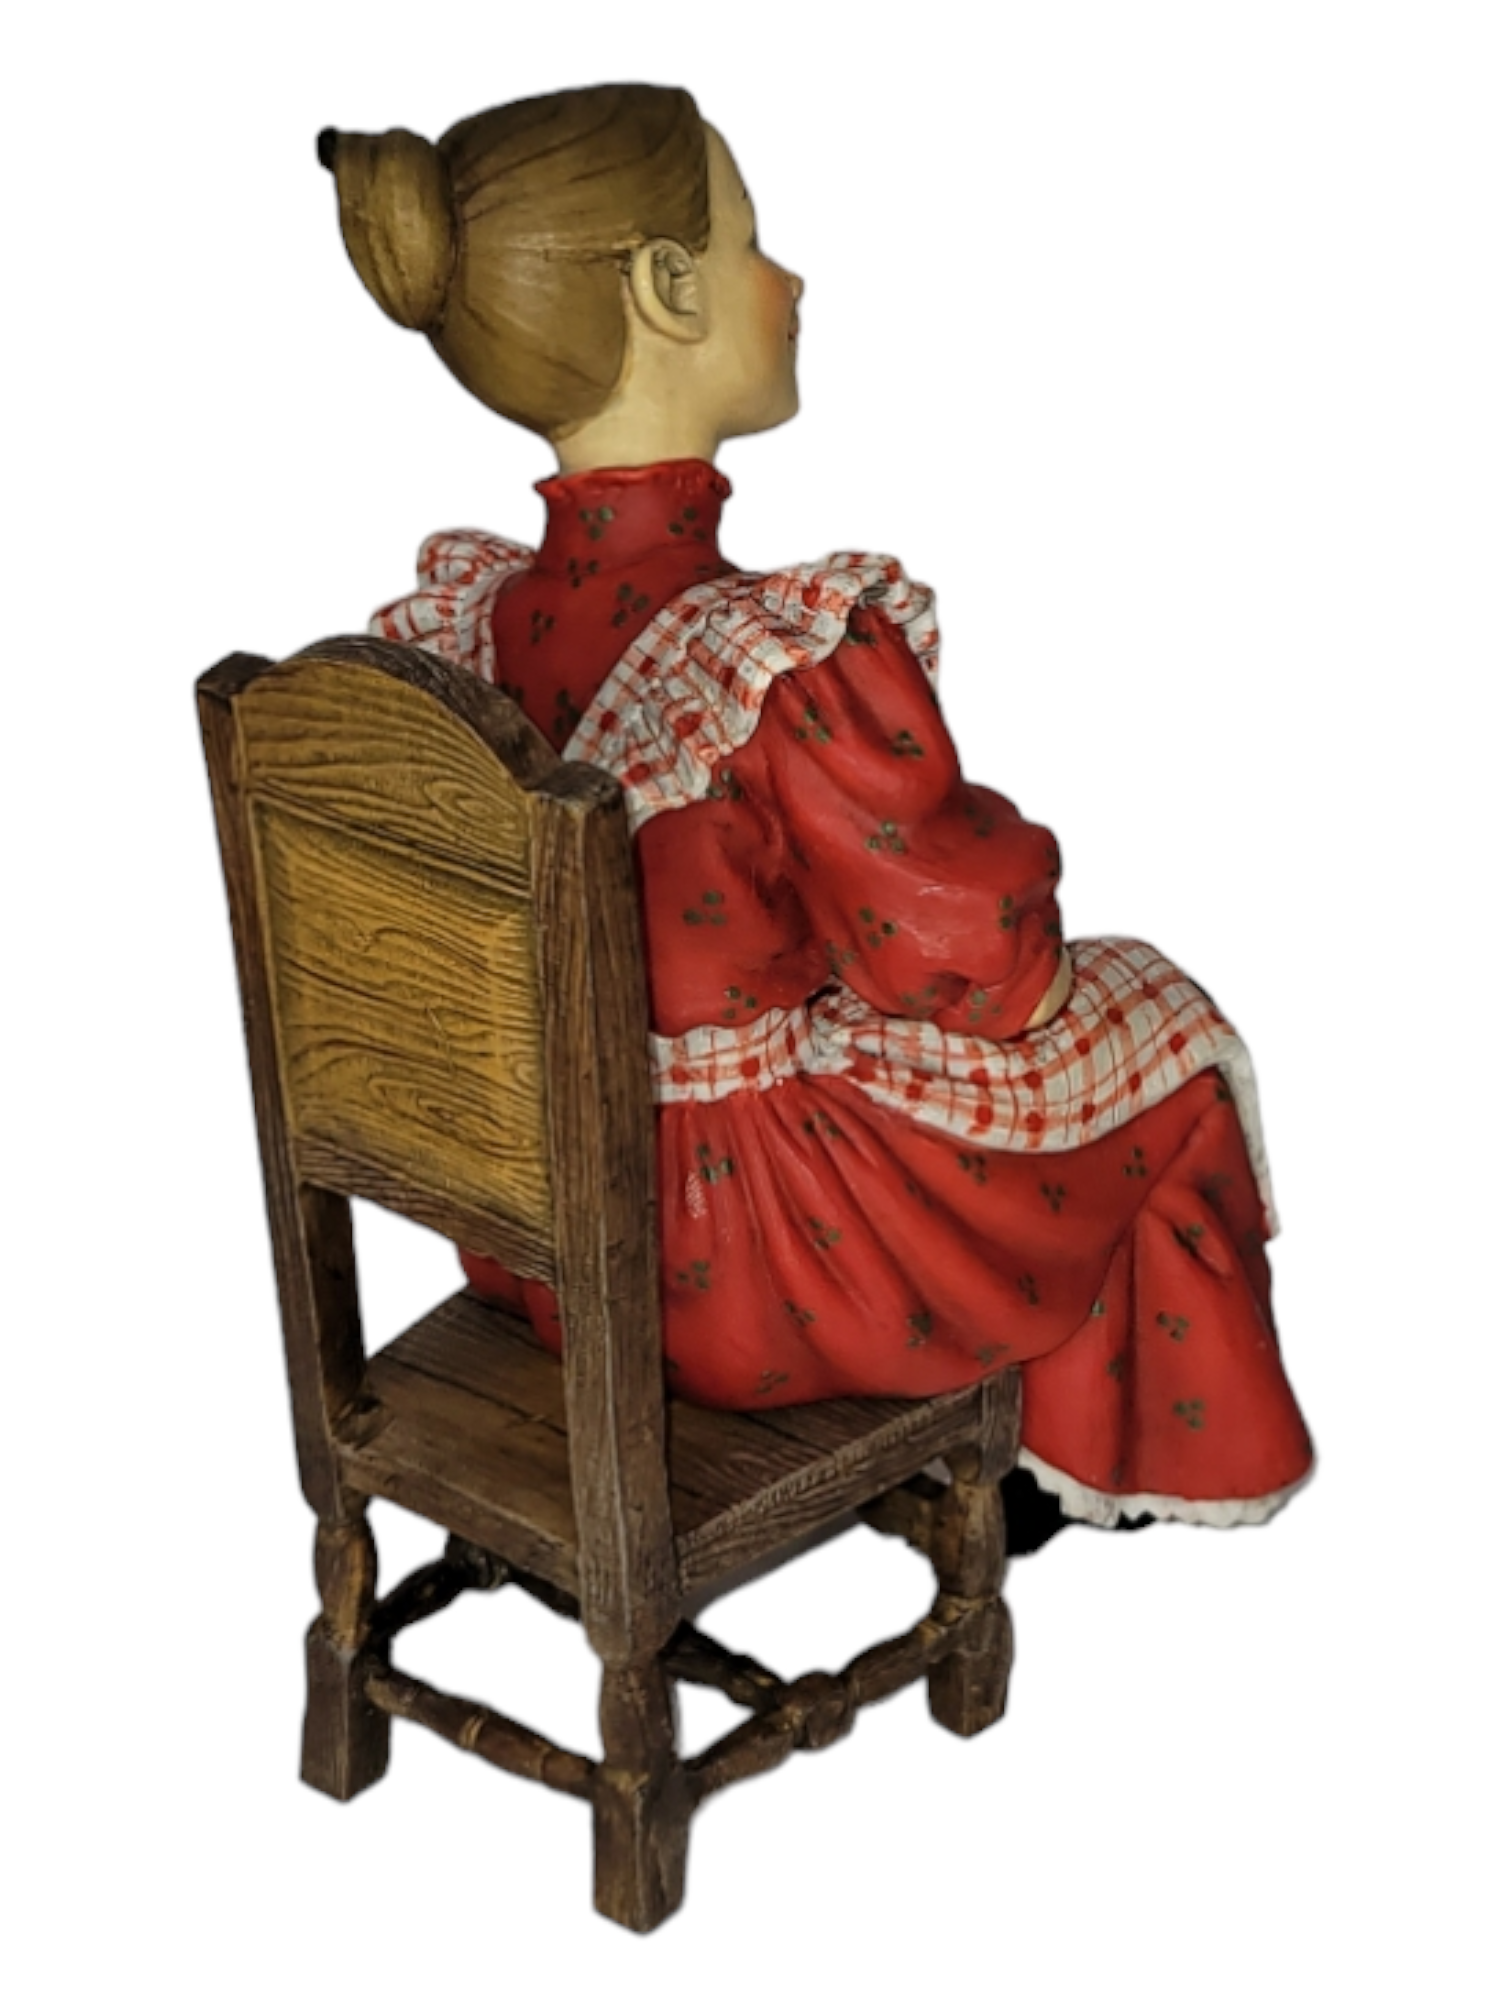 Figurine: Teacher in Chair